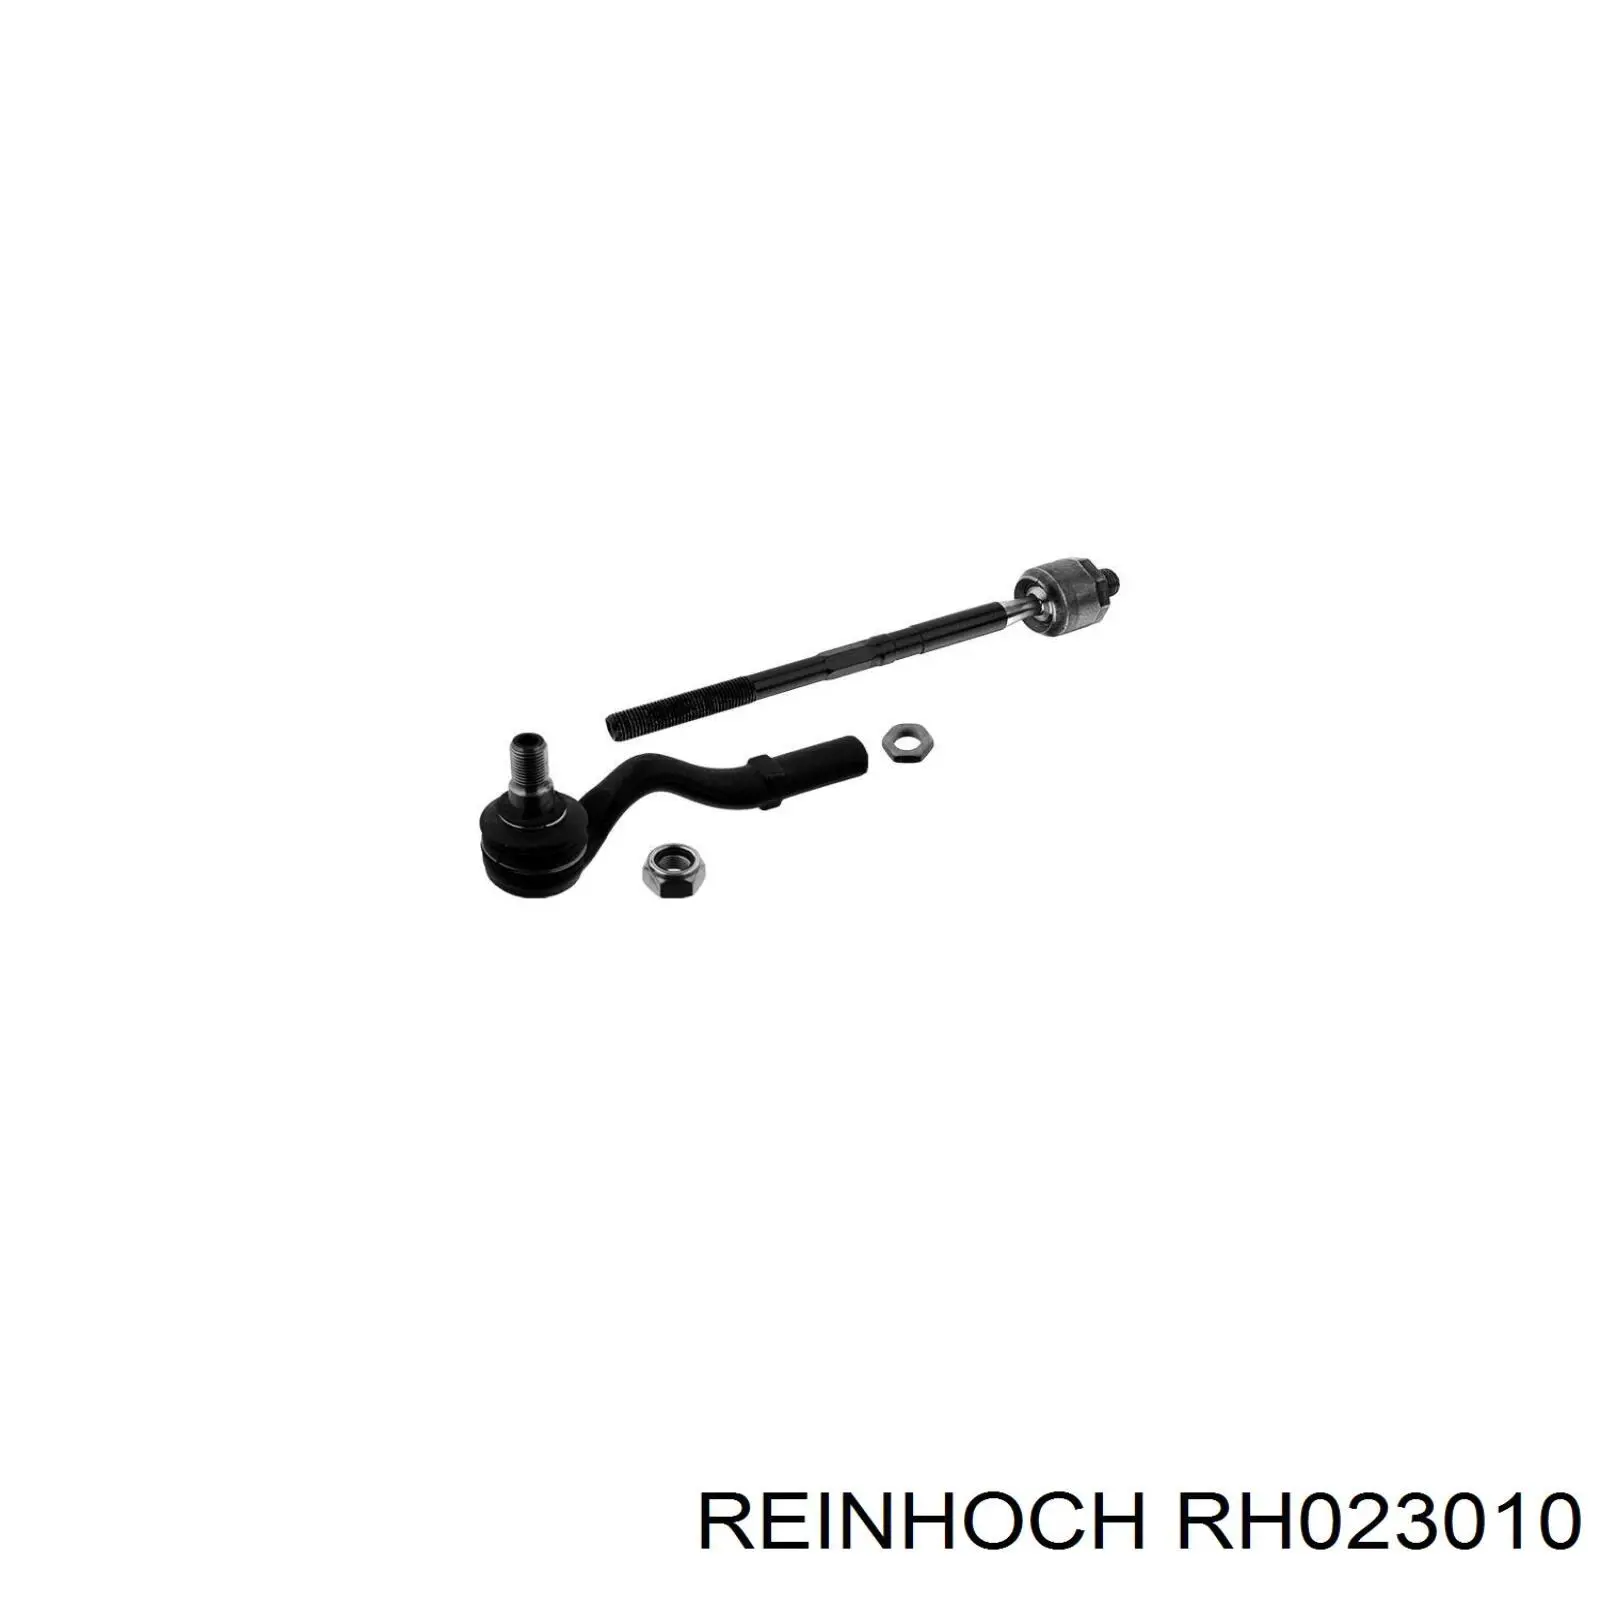 RH023010 Reinhoch barra de acoplamiento